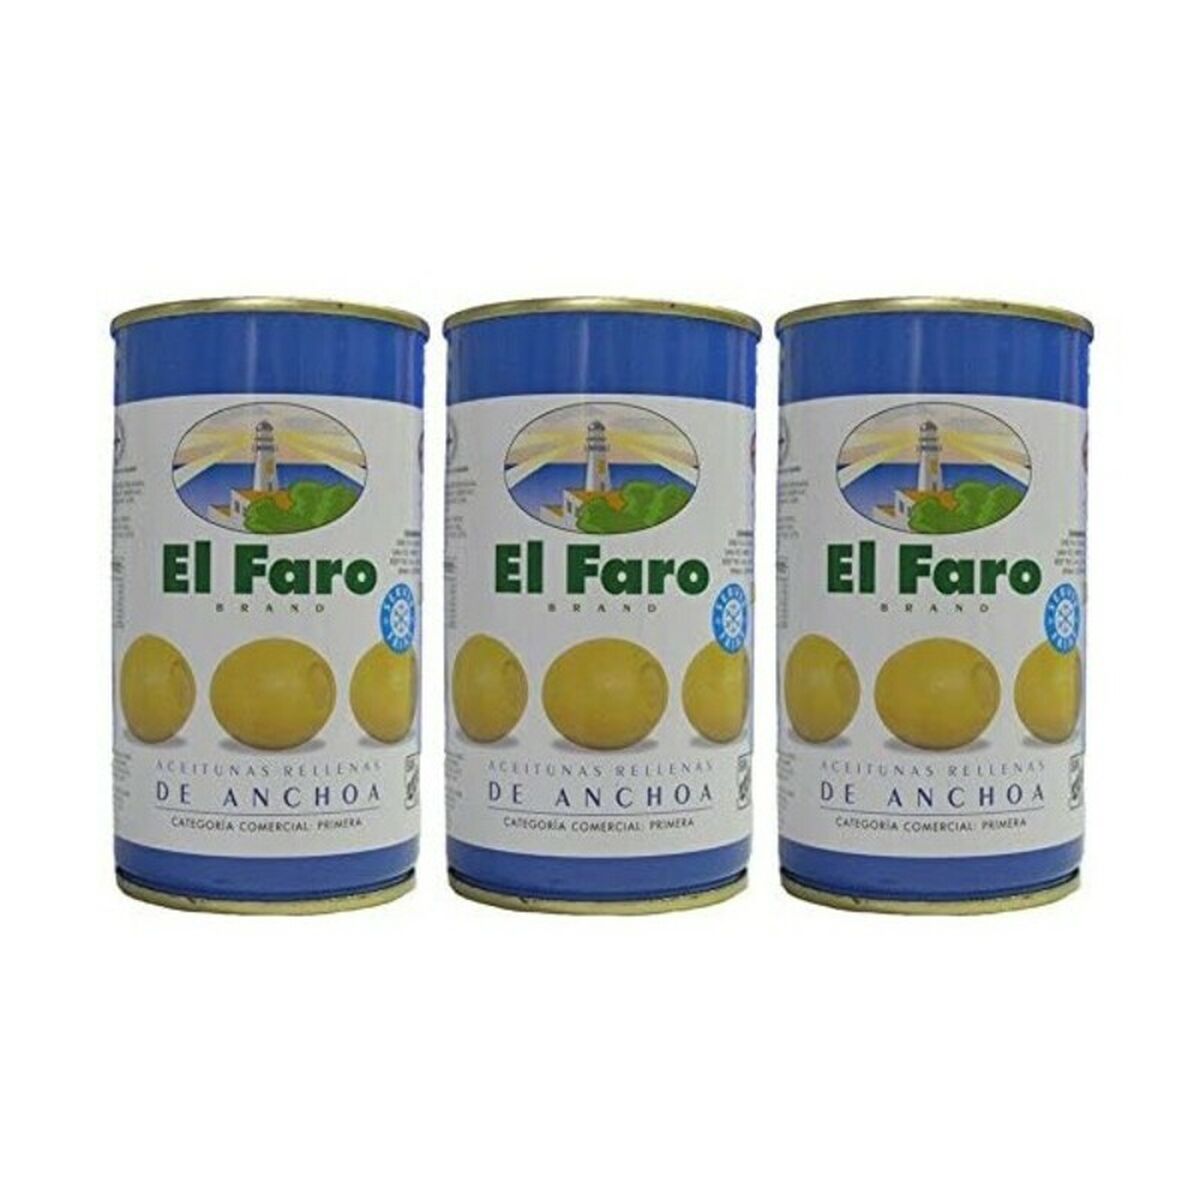 Olives El Faro (3 x 50 g)